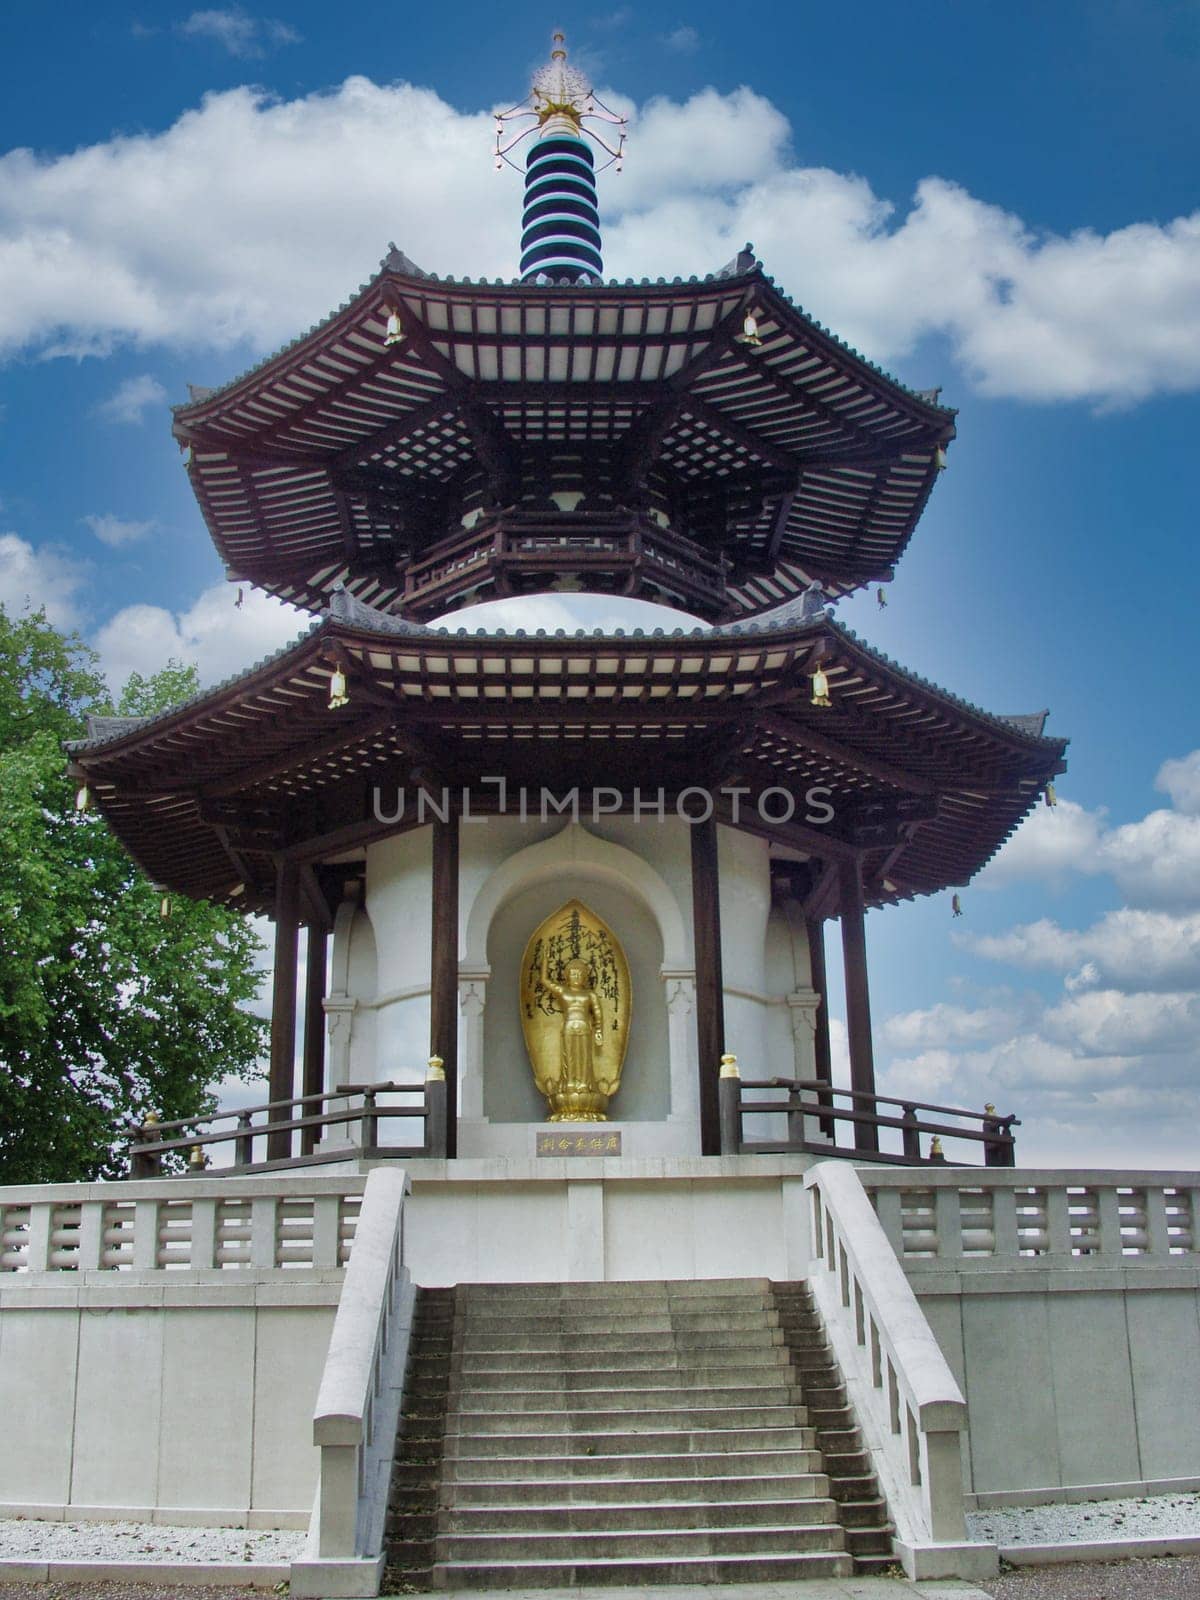 The London Peace Pagoda in Battersea park, London, UK